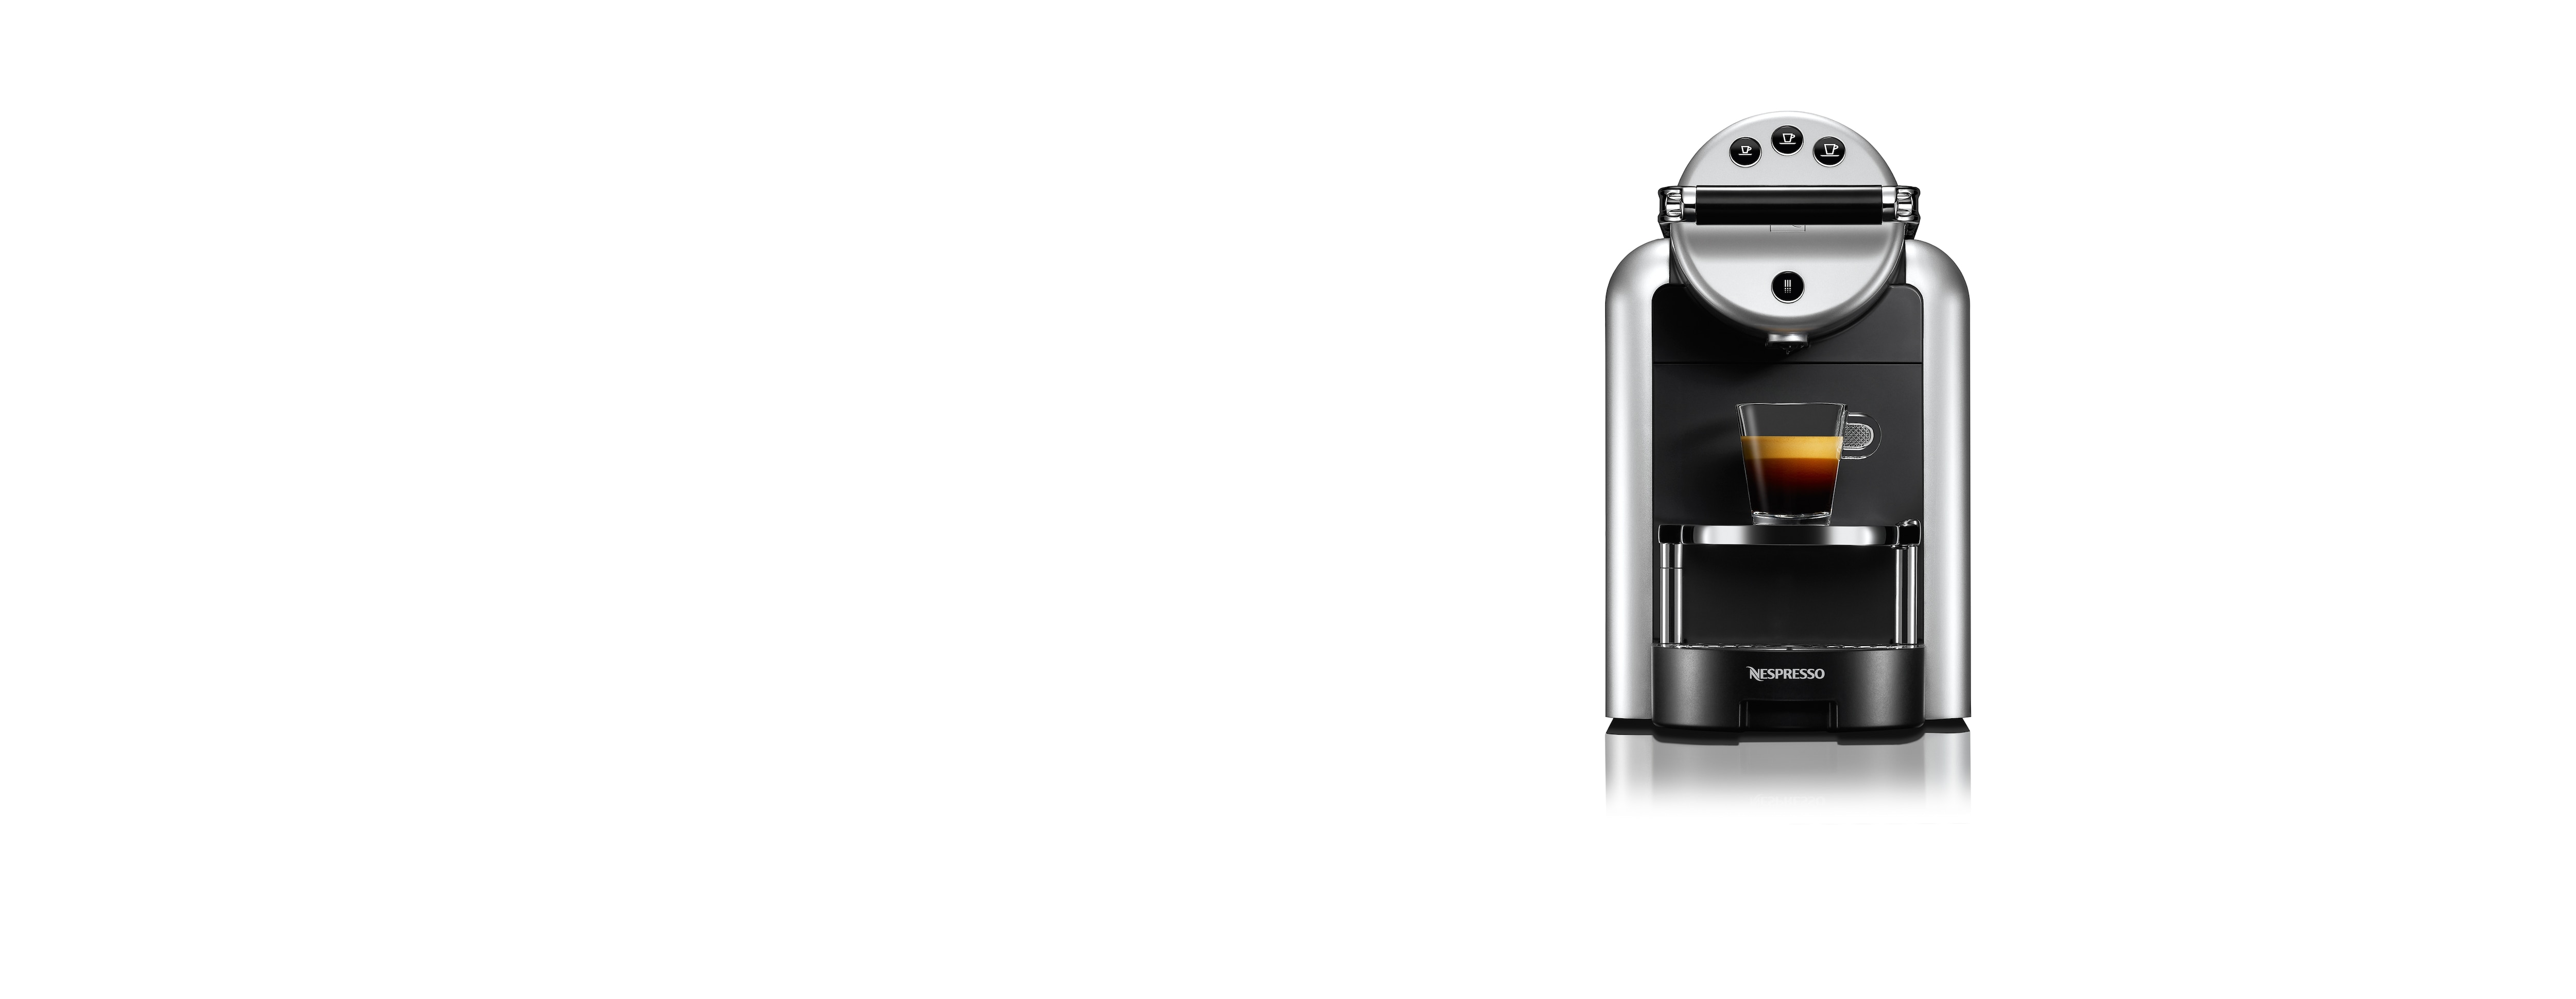  Nespresso Professional Coffee Maker Starter Bundle, Zenius  Professional Coffee Machine, Presentation Box for Nespresso Capsules,Black  and Silver: Home & Kitchen